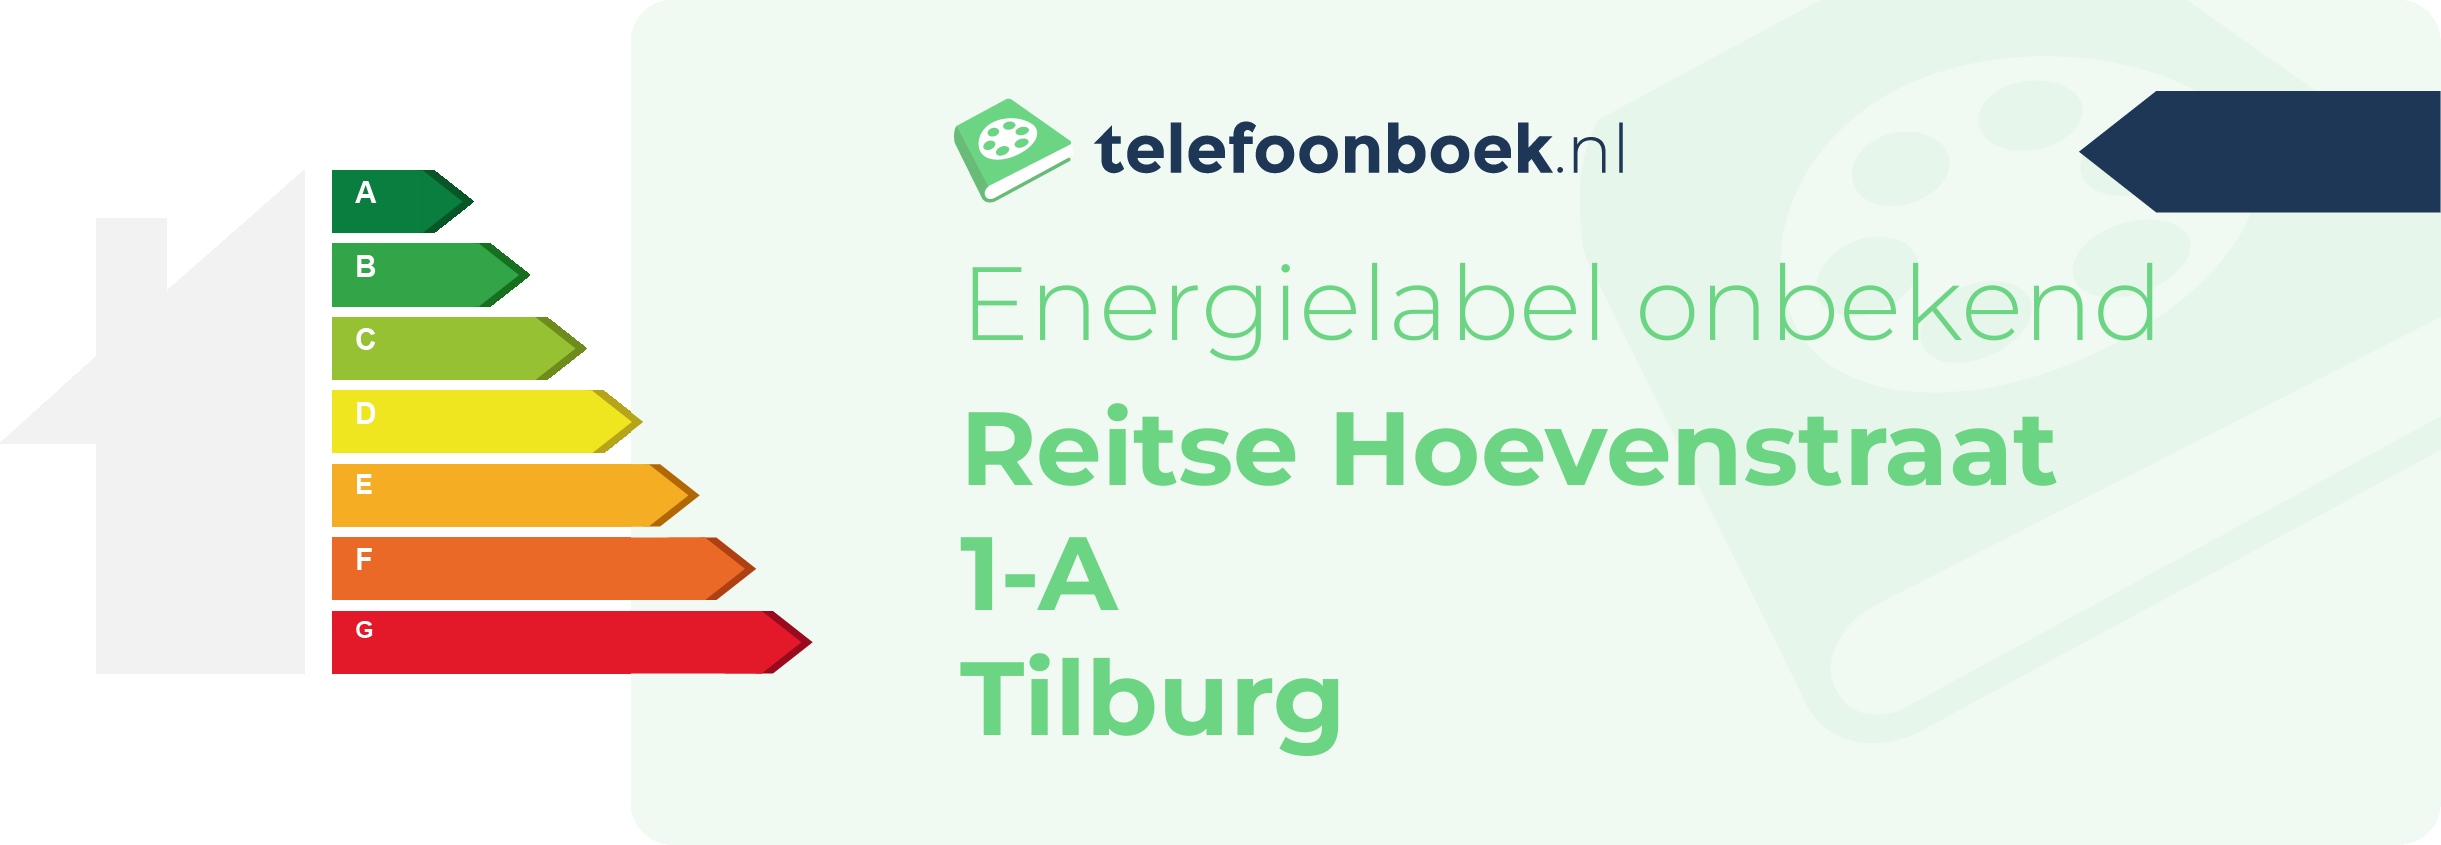 Energielabel Reitse Hoevenstraat 1-A Tilburg